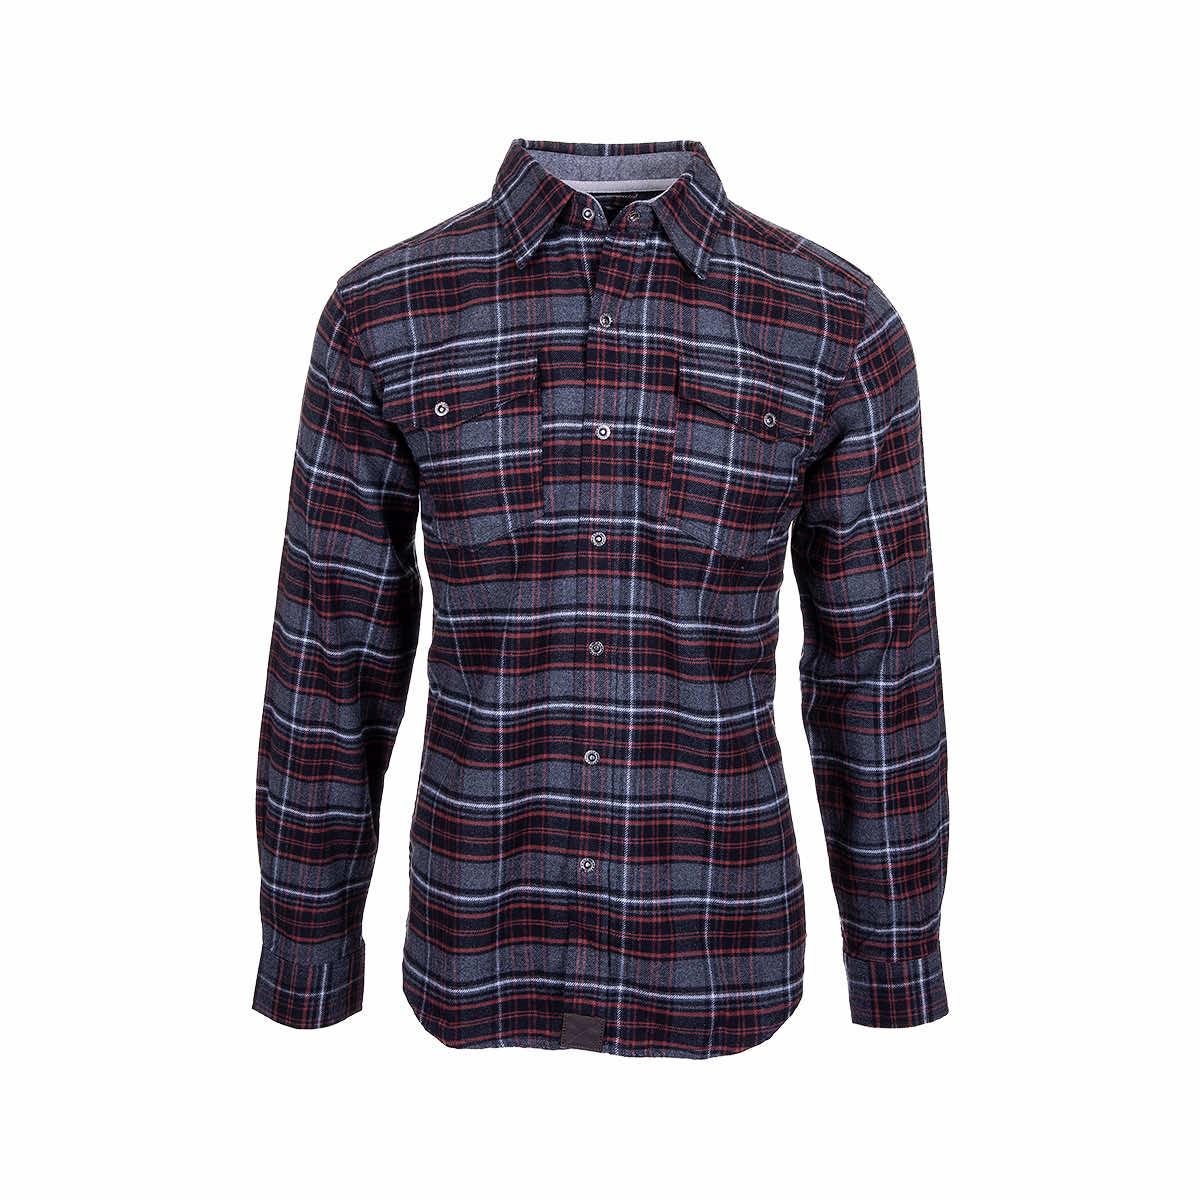  Men's Riley Plaid Flannel Shirt